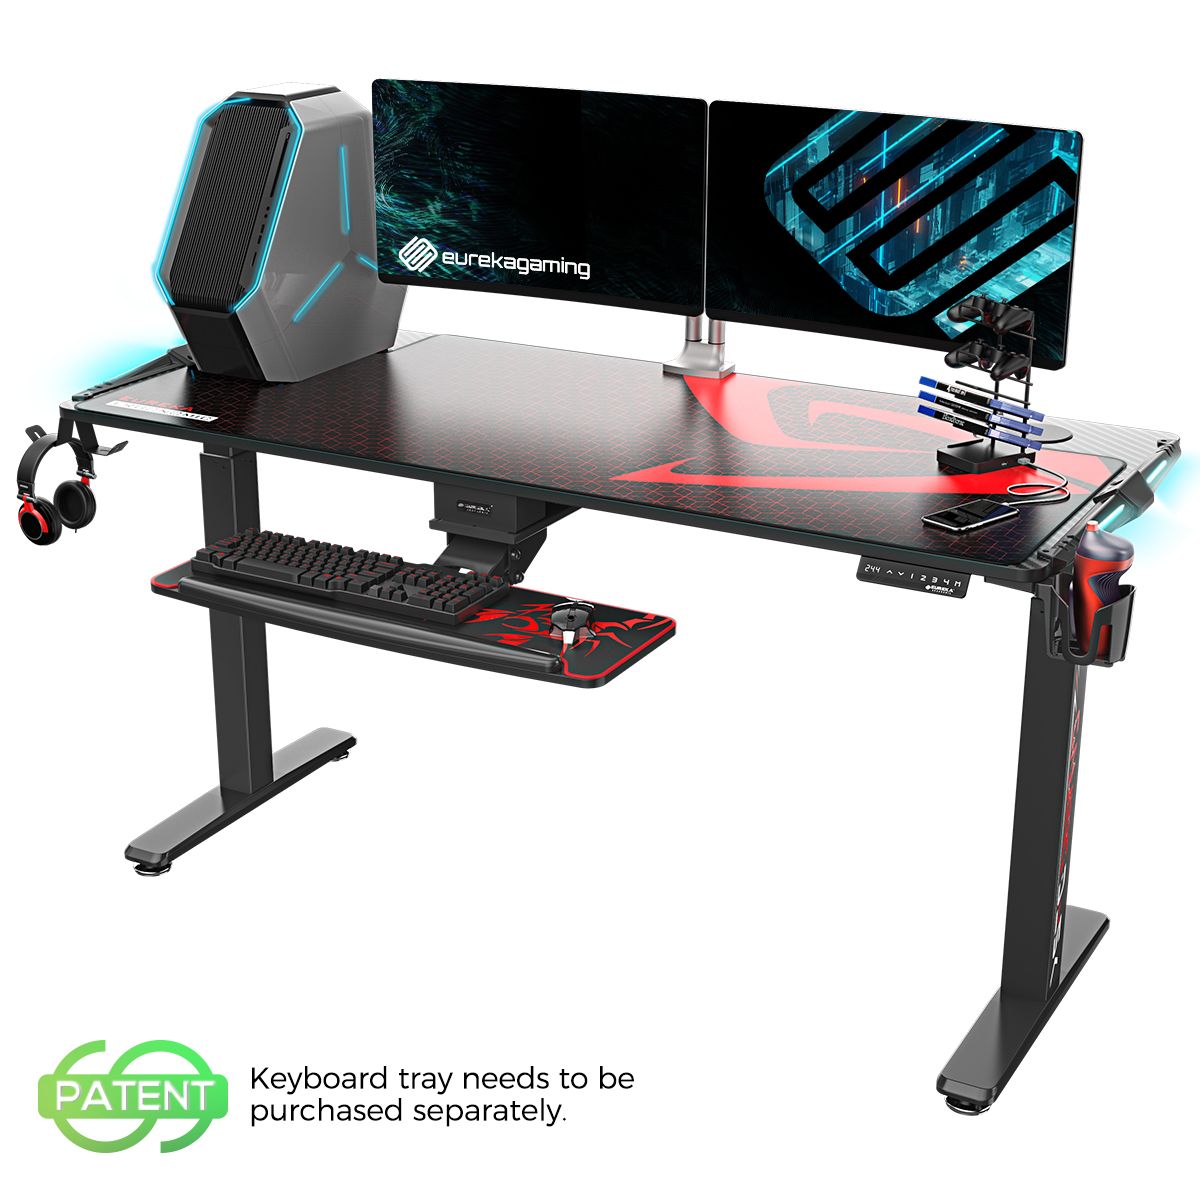 Eureka Glass Desktop Gaming Desk with Desk Organizer and RGB Lighting